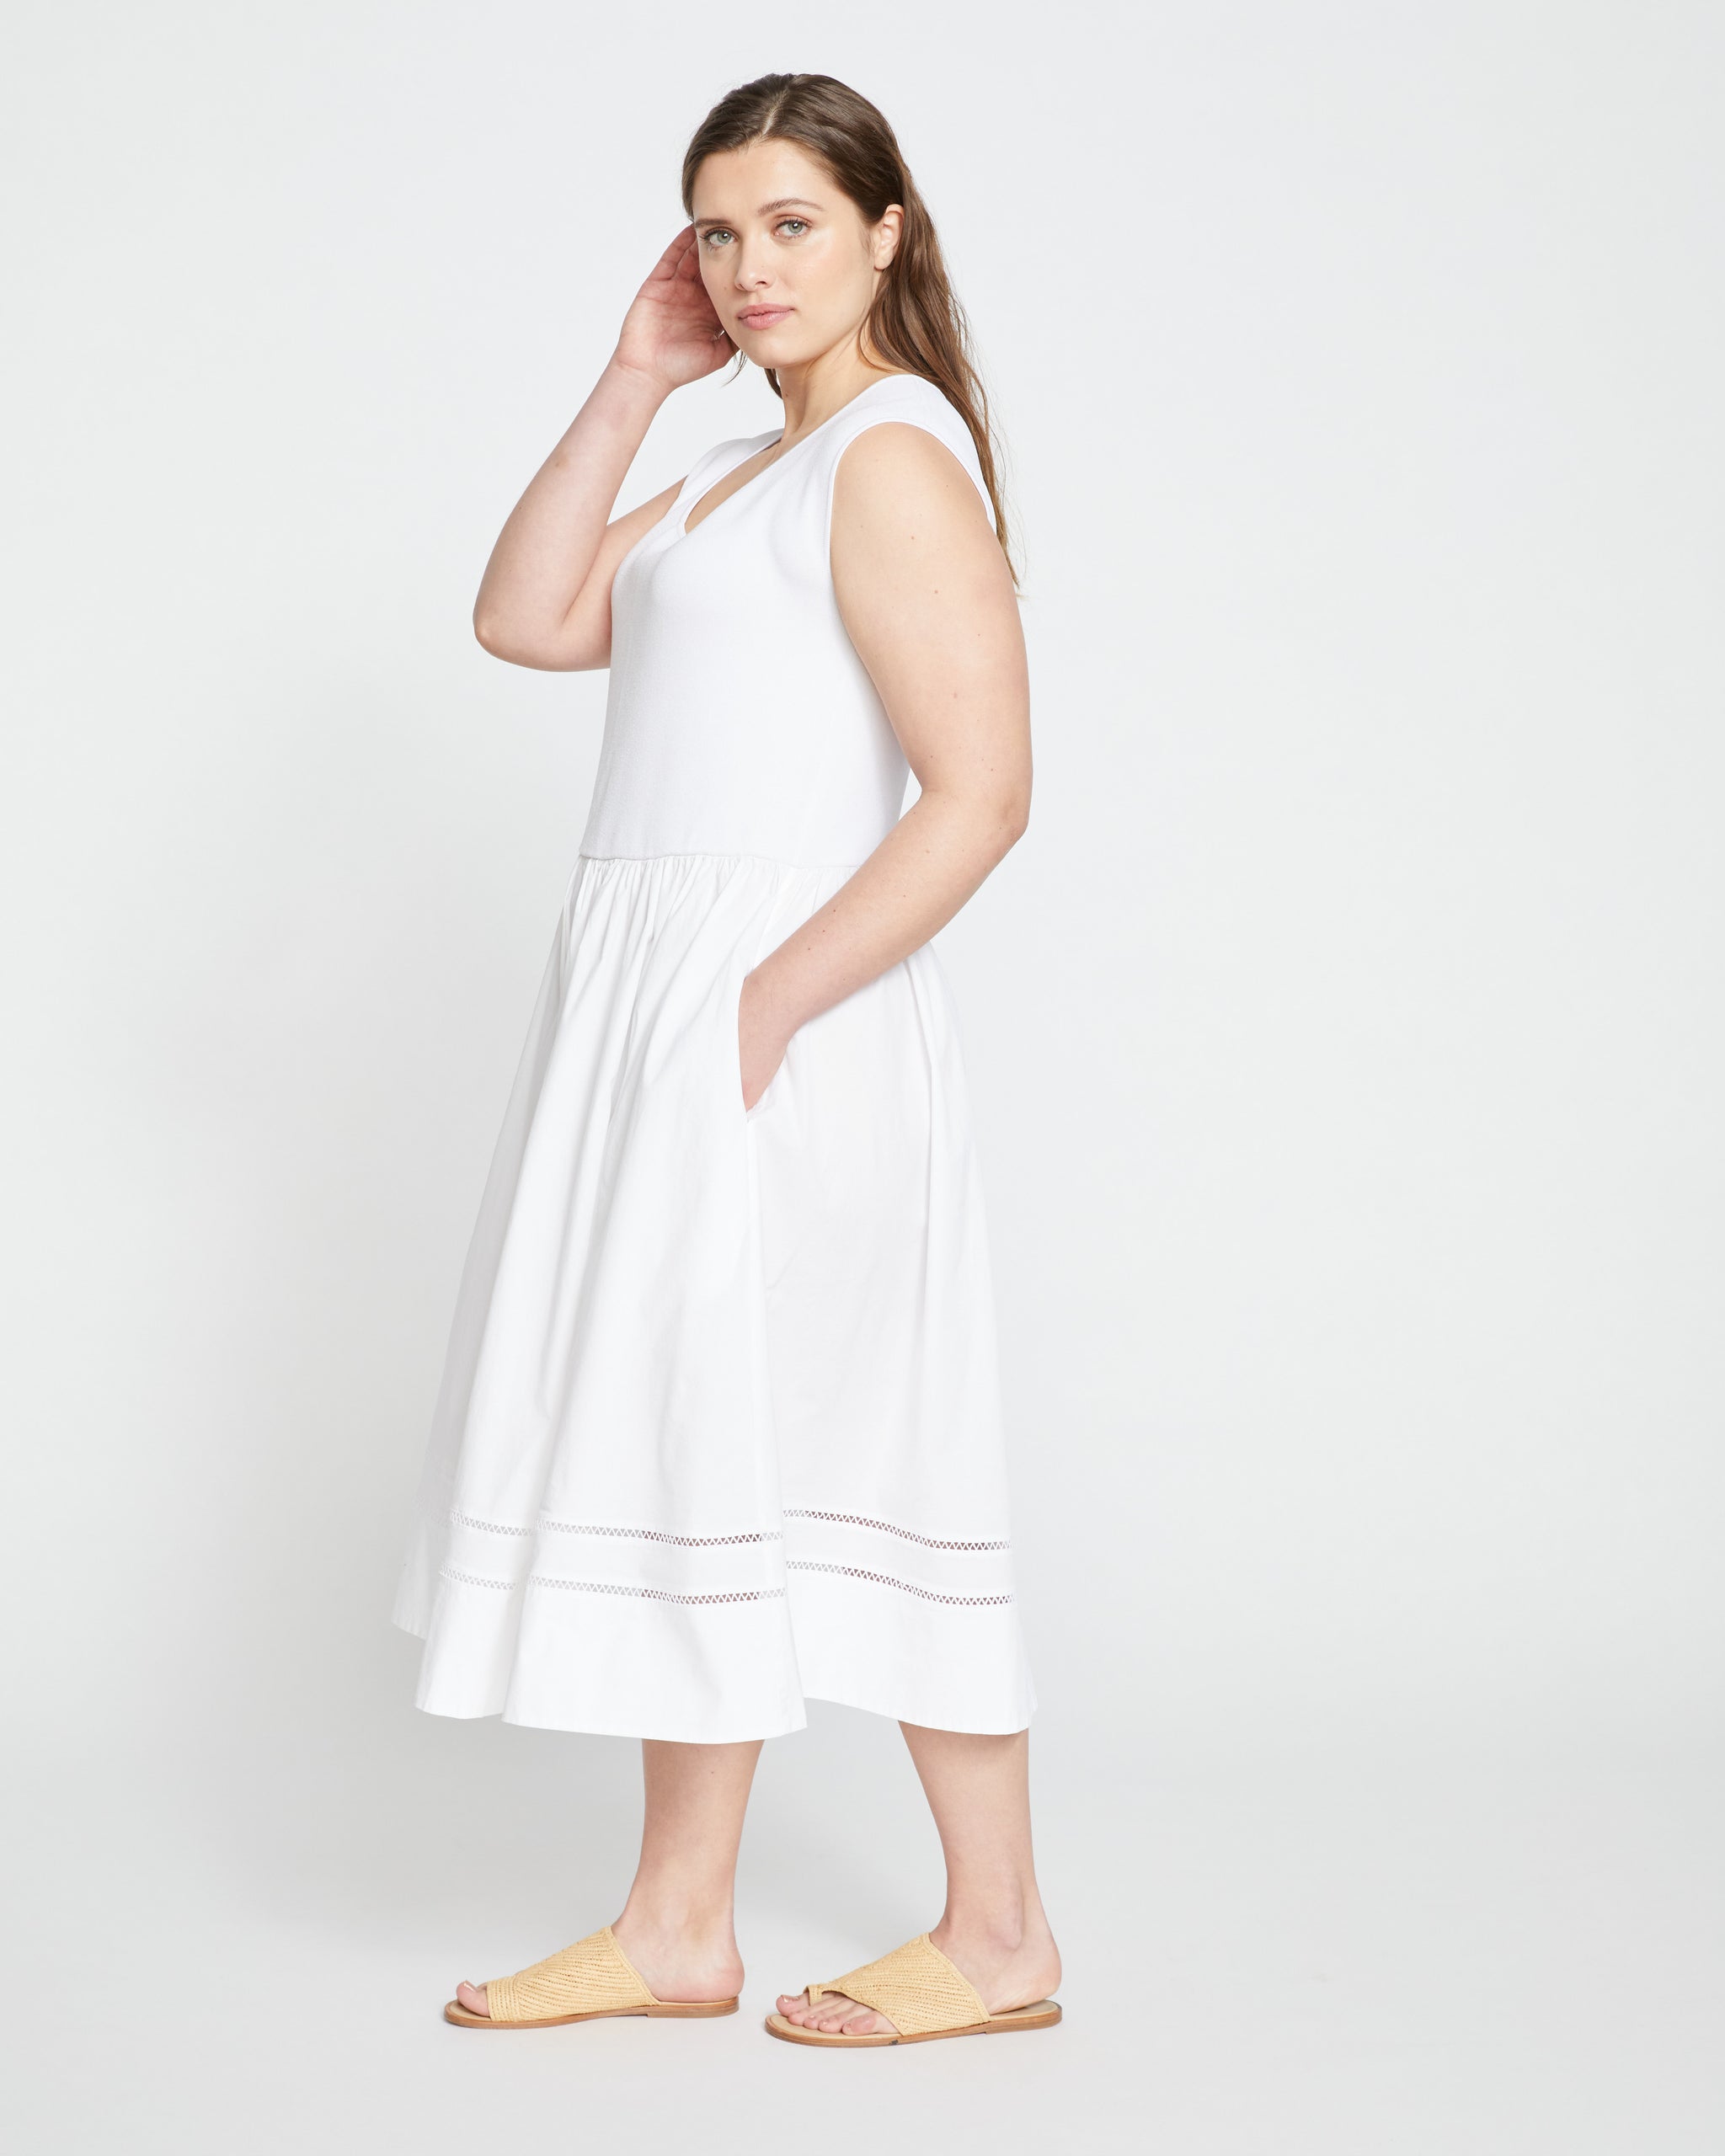 Chloe Combo Dress - White